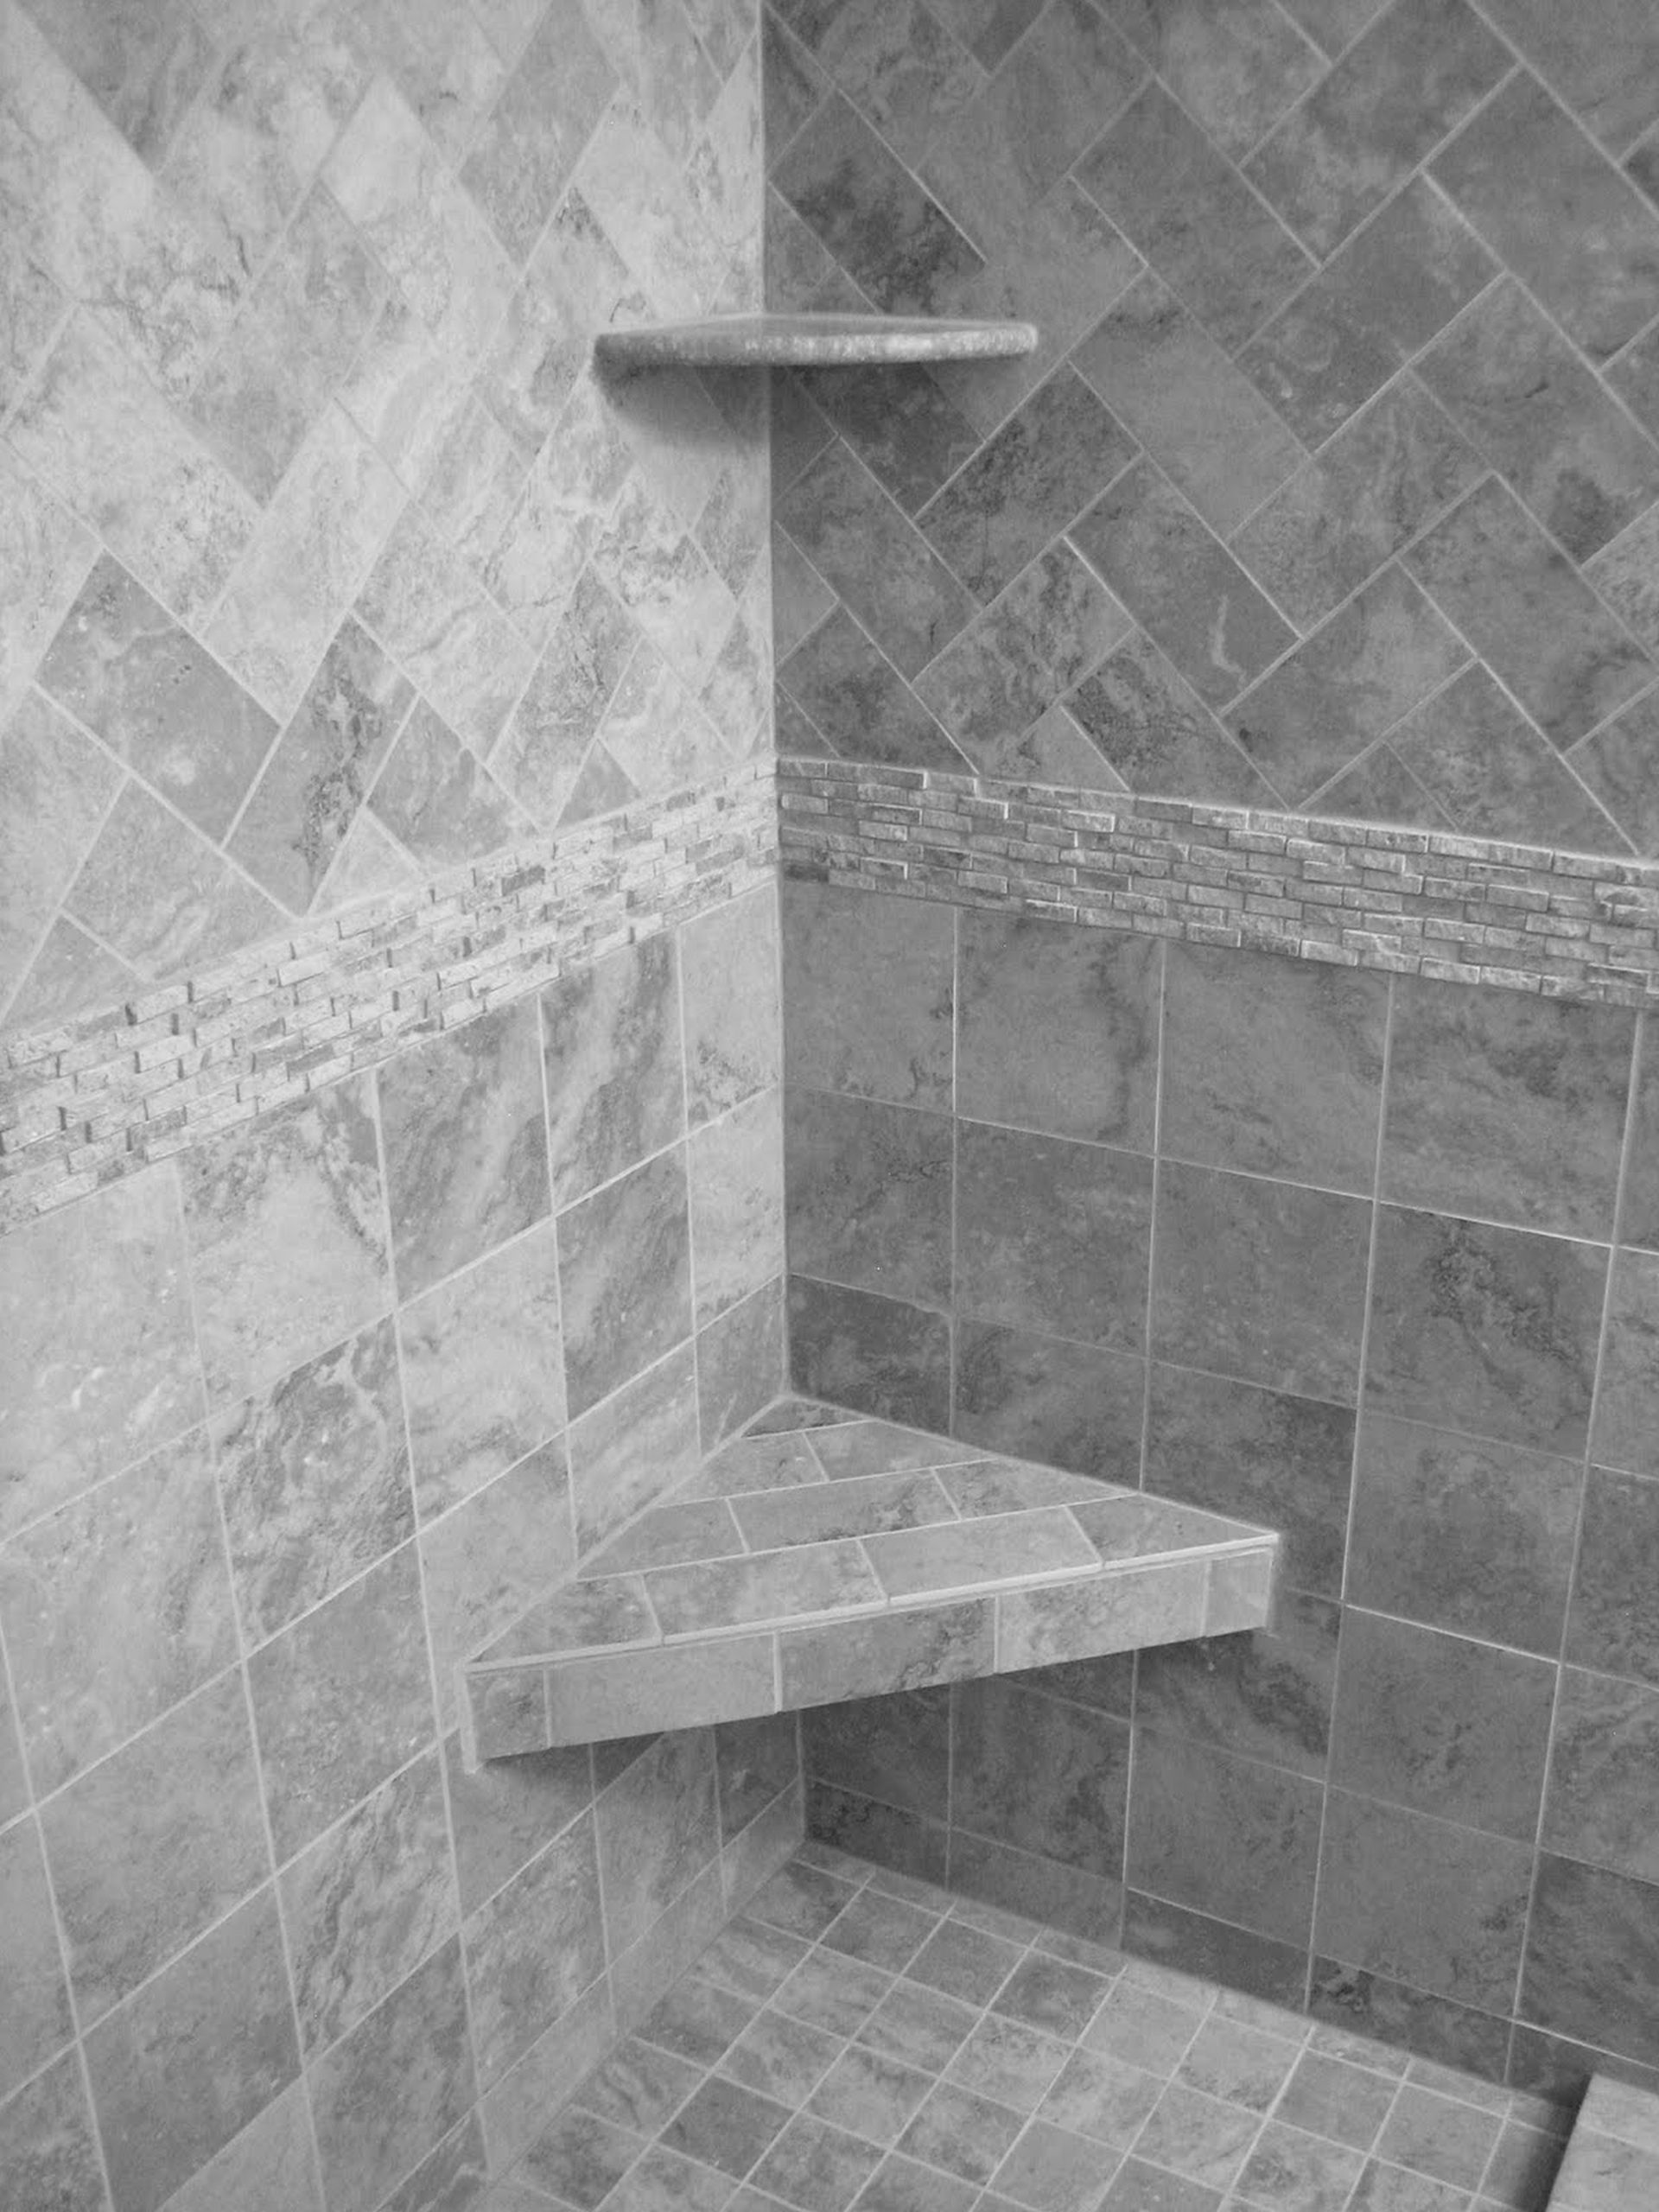 Home Depot Bathroom Tiles
 Home Depot Bathroom Tile Designs – HomesFeed